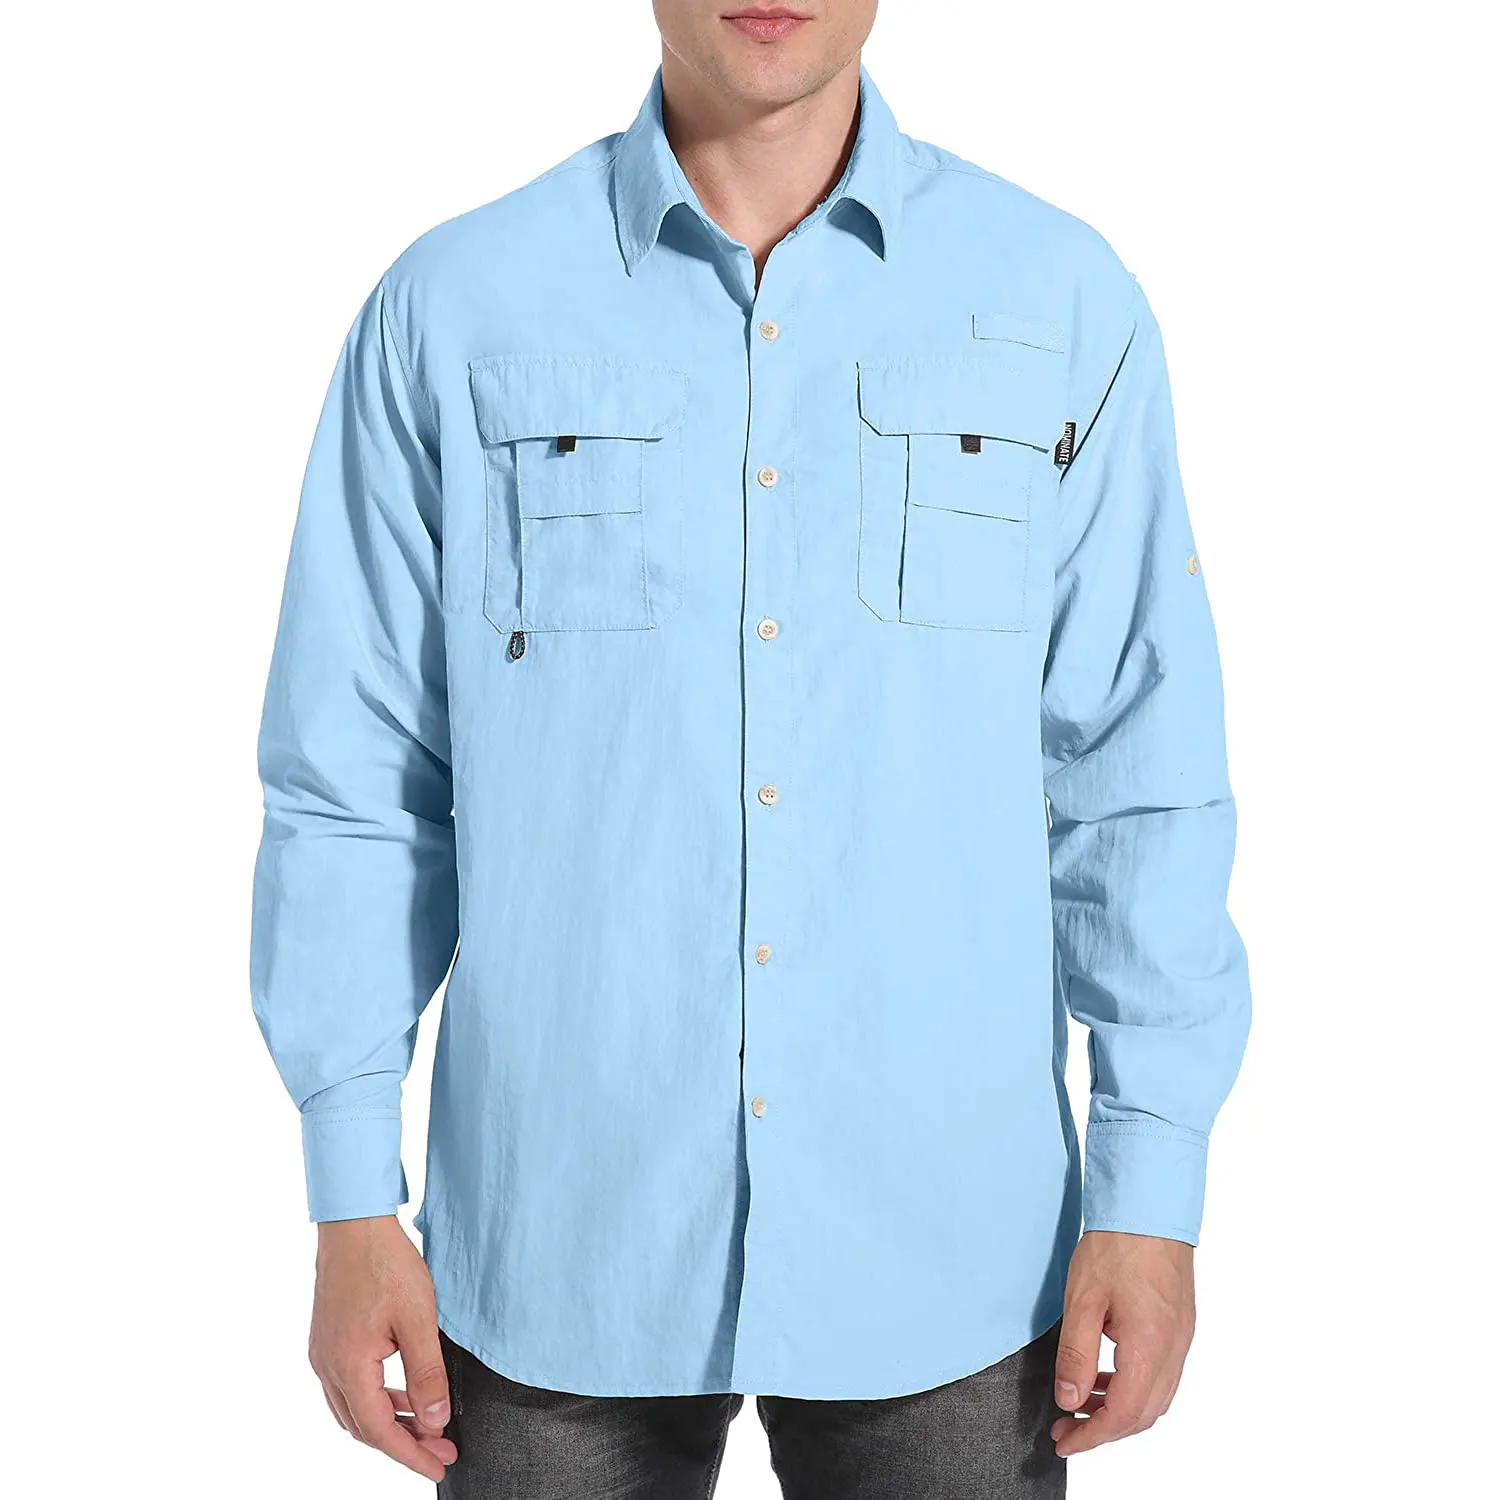 Men's SPF UPF 50+ Quick Dry Fishing Hiking Shirts Breathable Long Sleeve Shirt